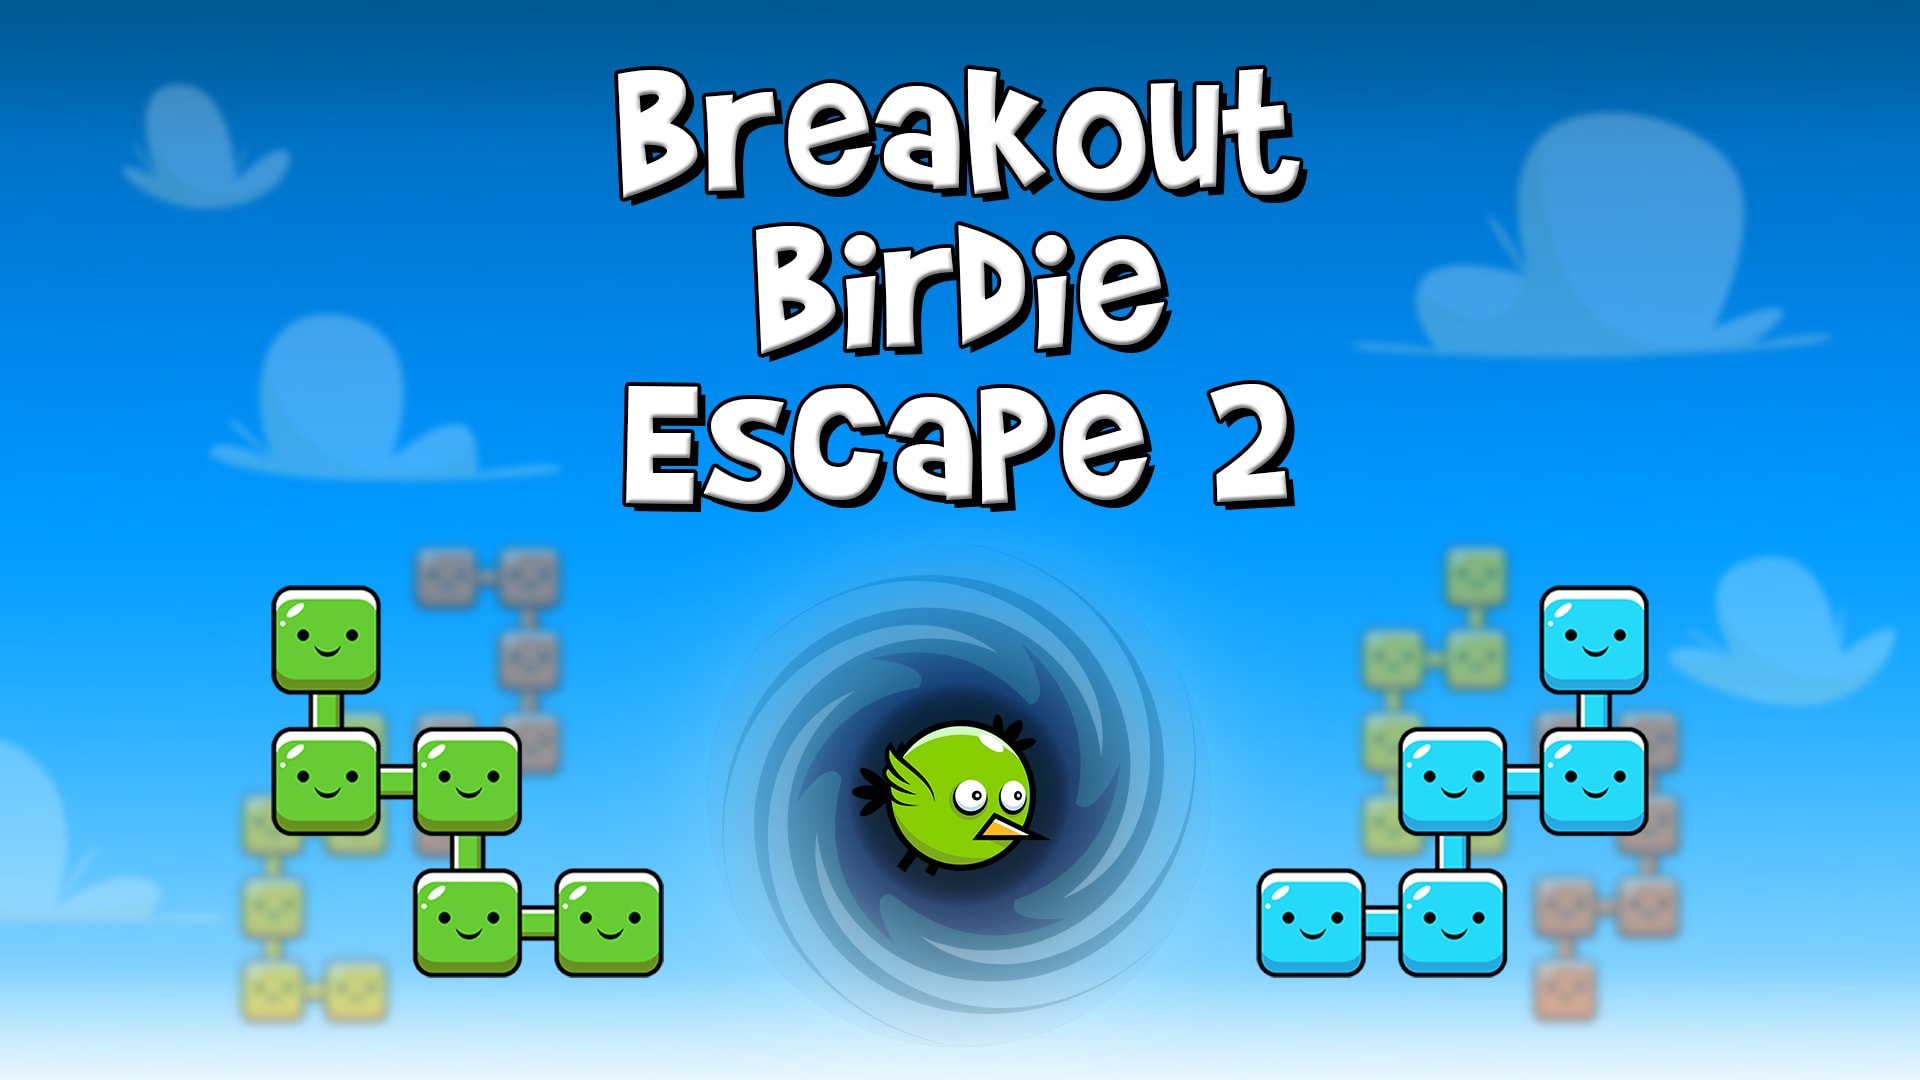 Breakout Birdie Escape 2